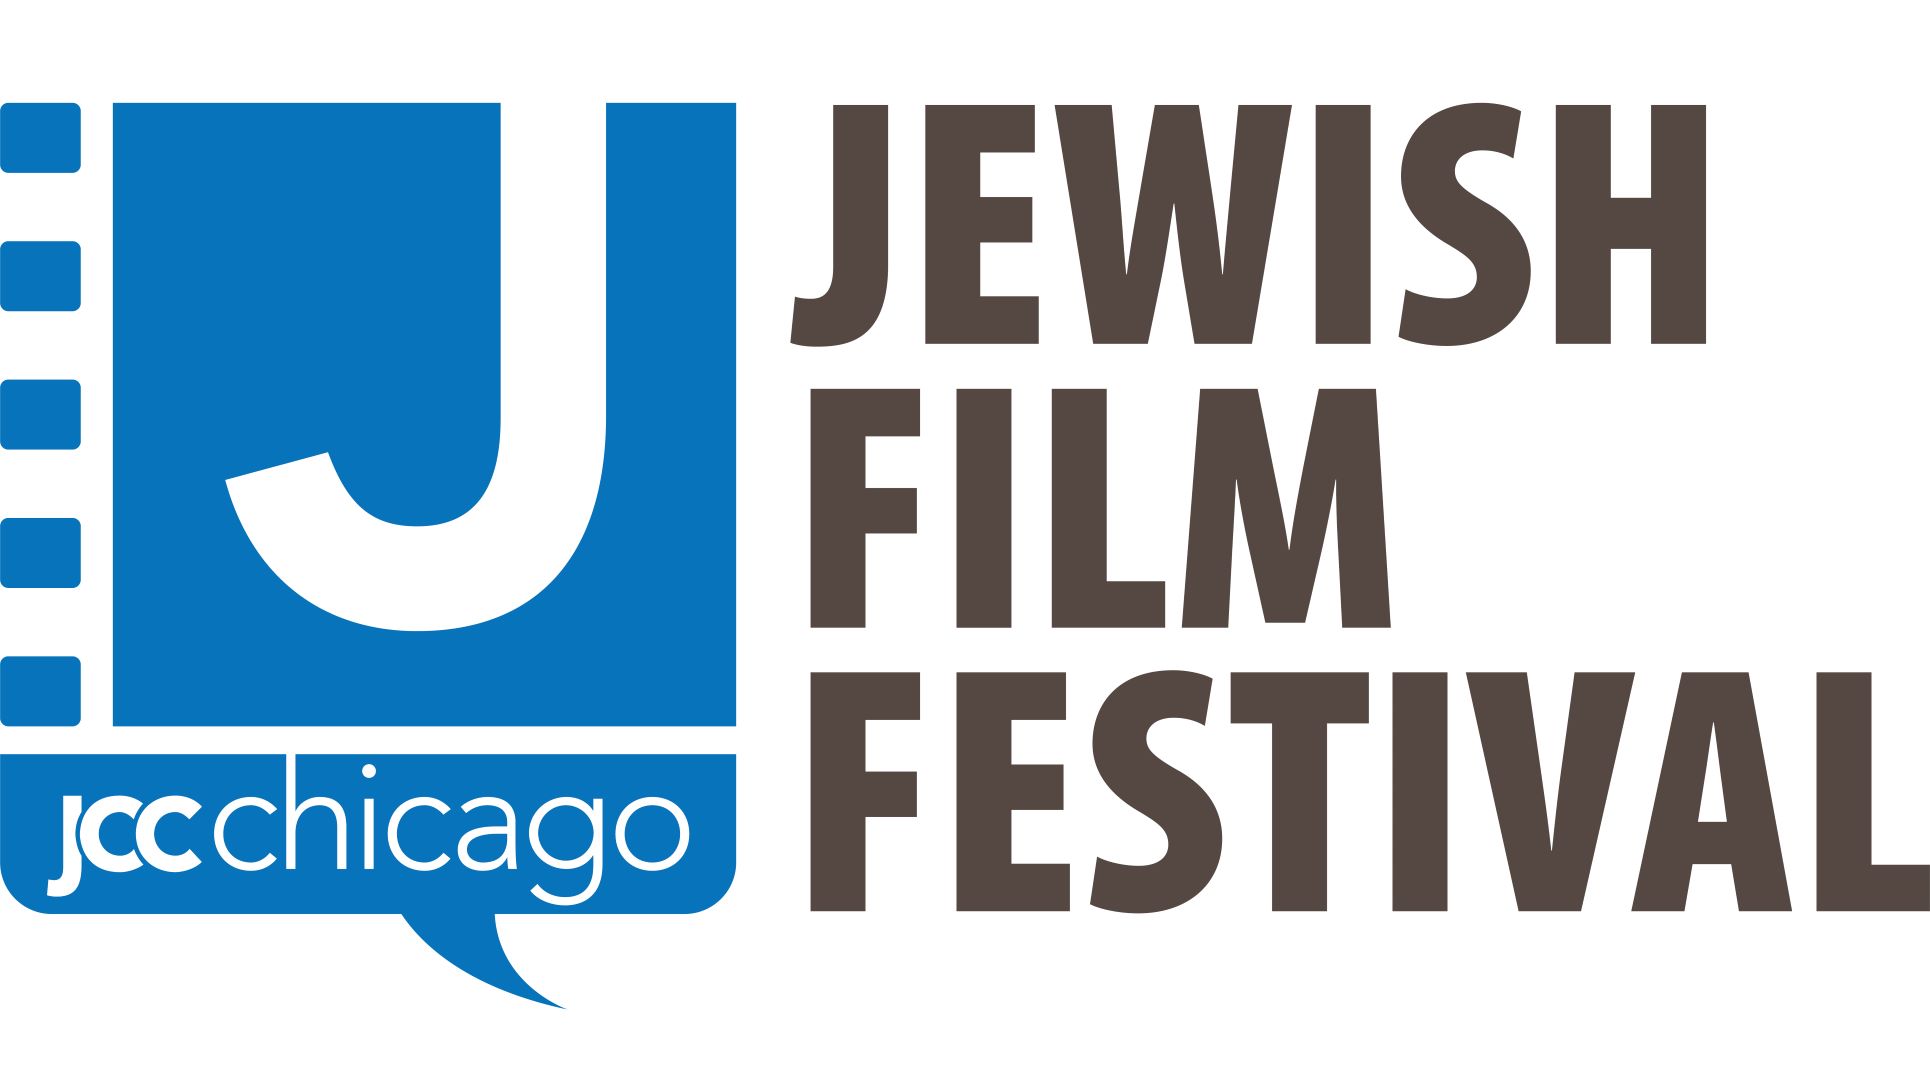 Catalog 2022 JCC Chicago Jewish Film Festival